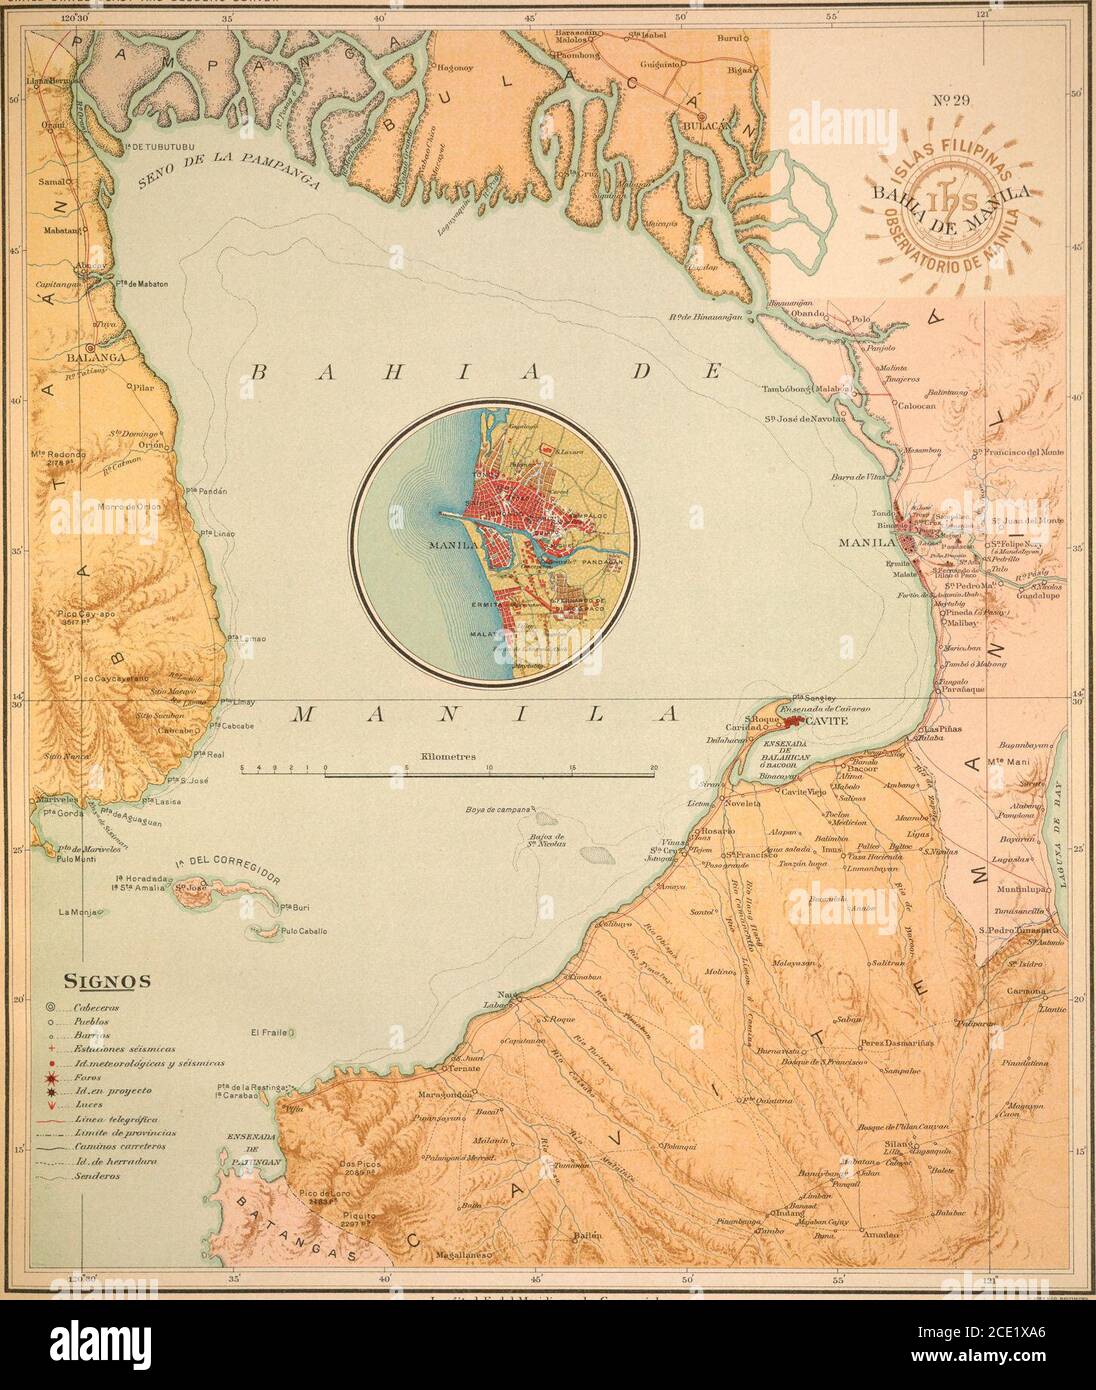 Atlas Of The Philippine Islands Bs R 0 U J O X 0 5 O I2o I 0 United States Coast And Geodetic Survey N9